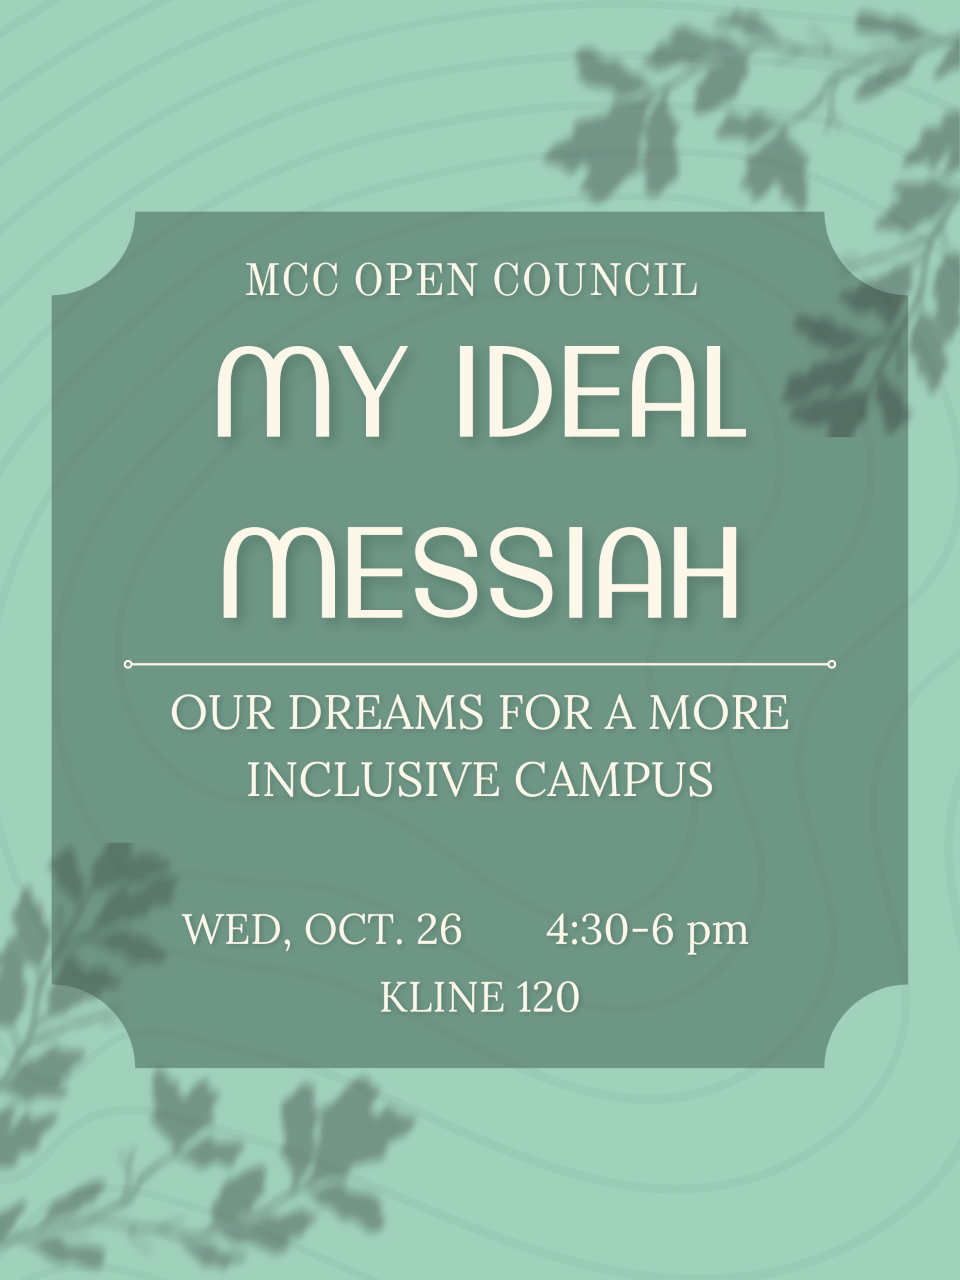 Thumbnail mcc open council ideal messiah